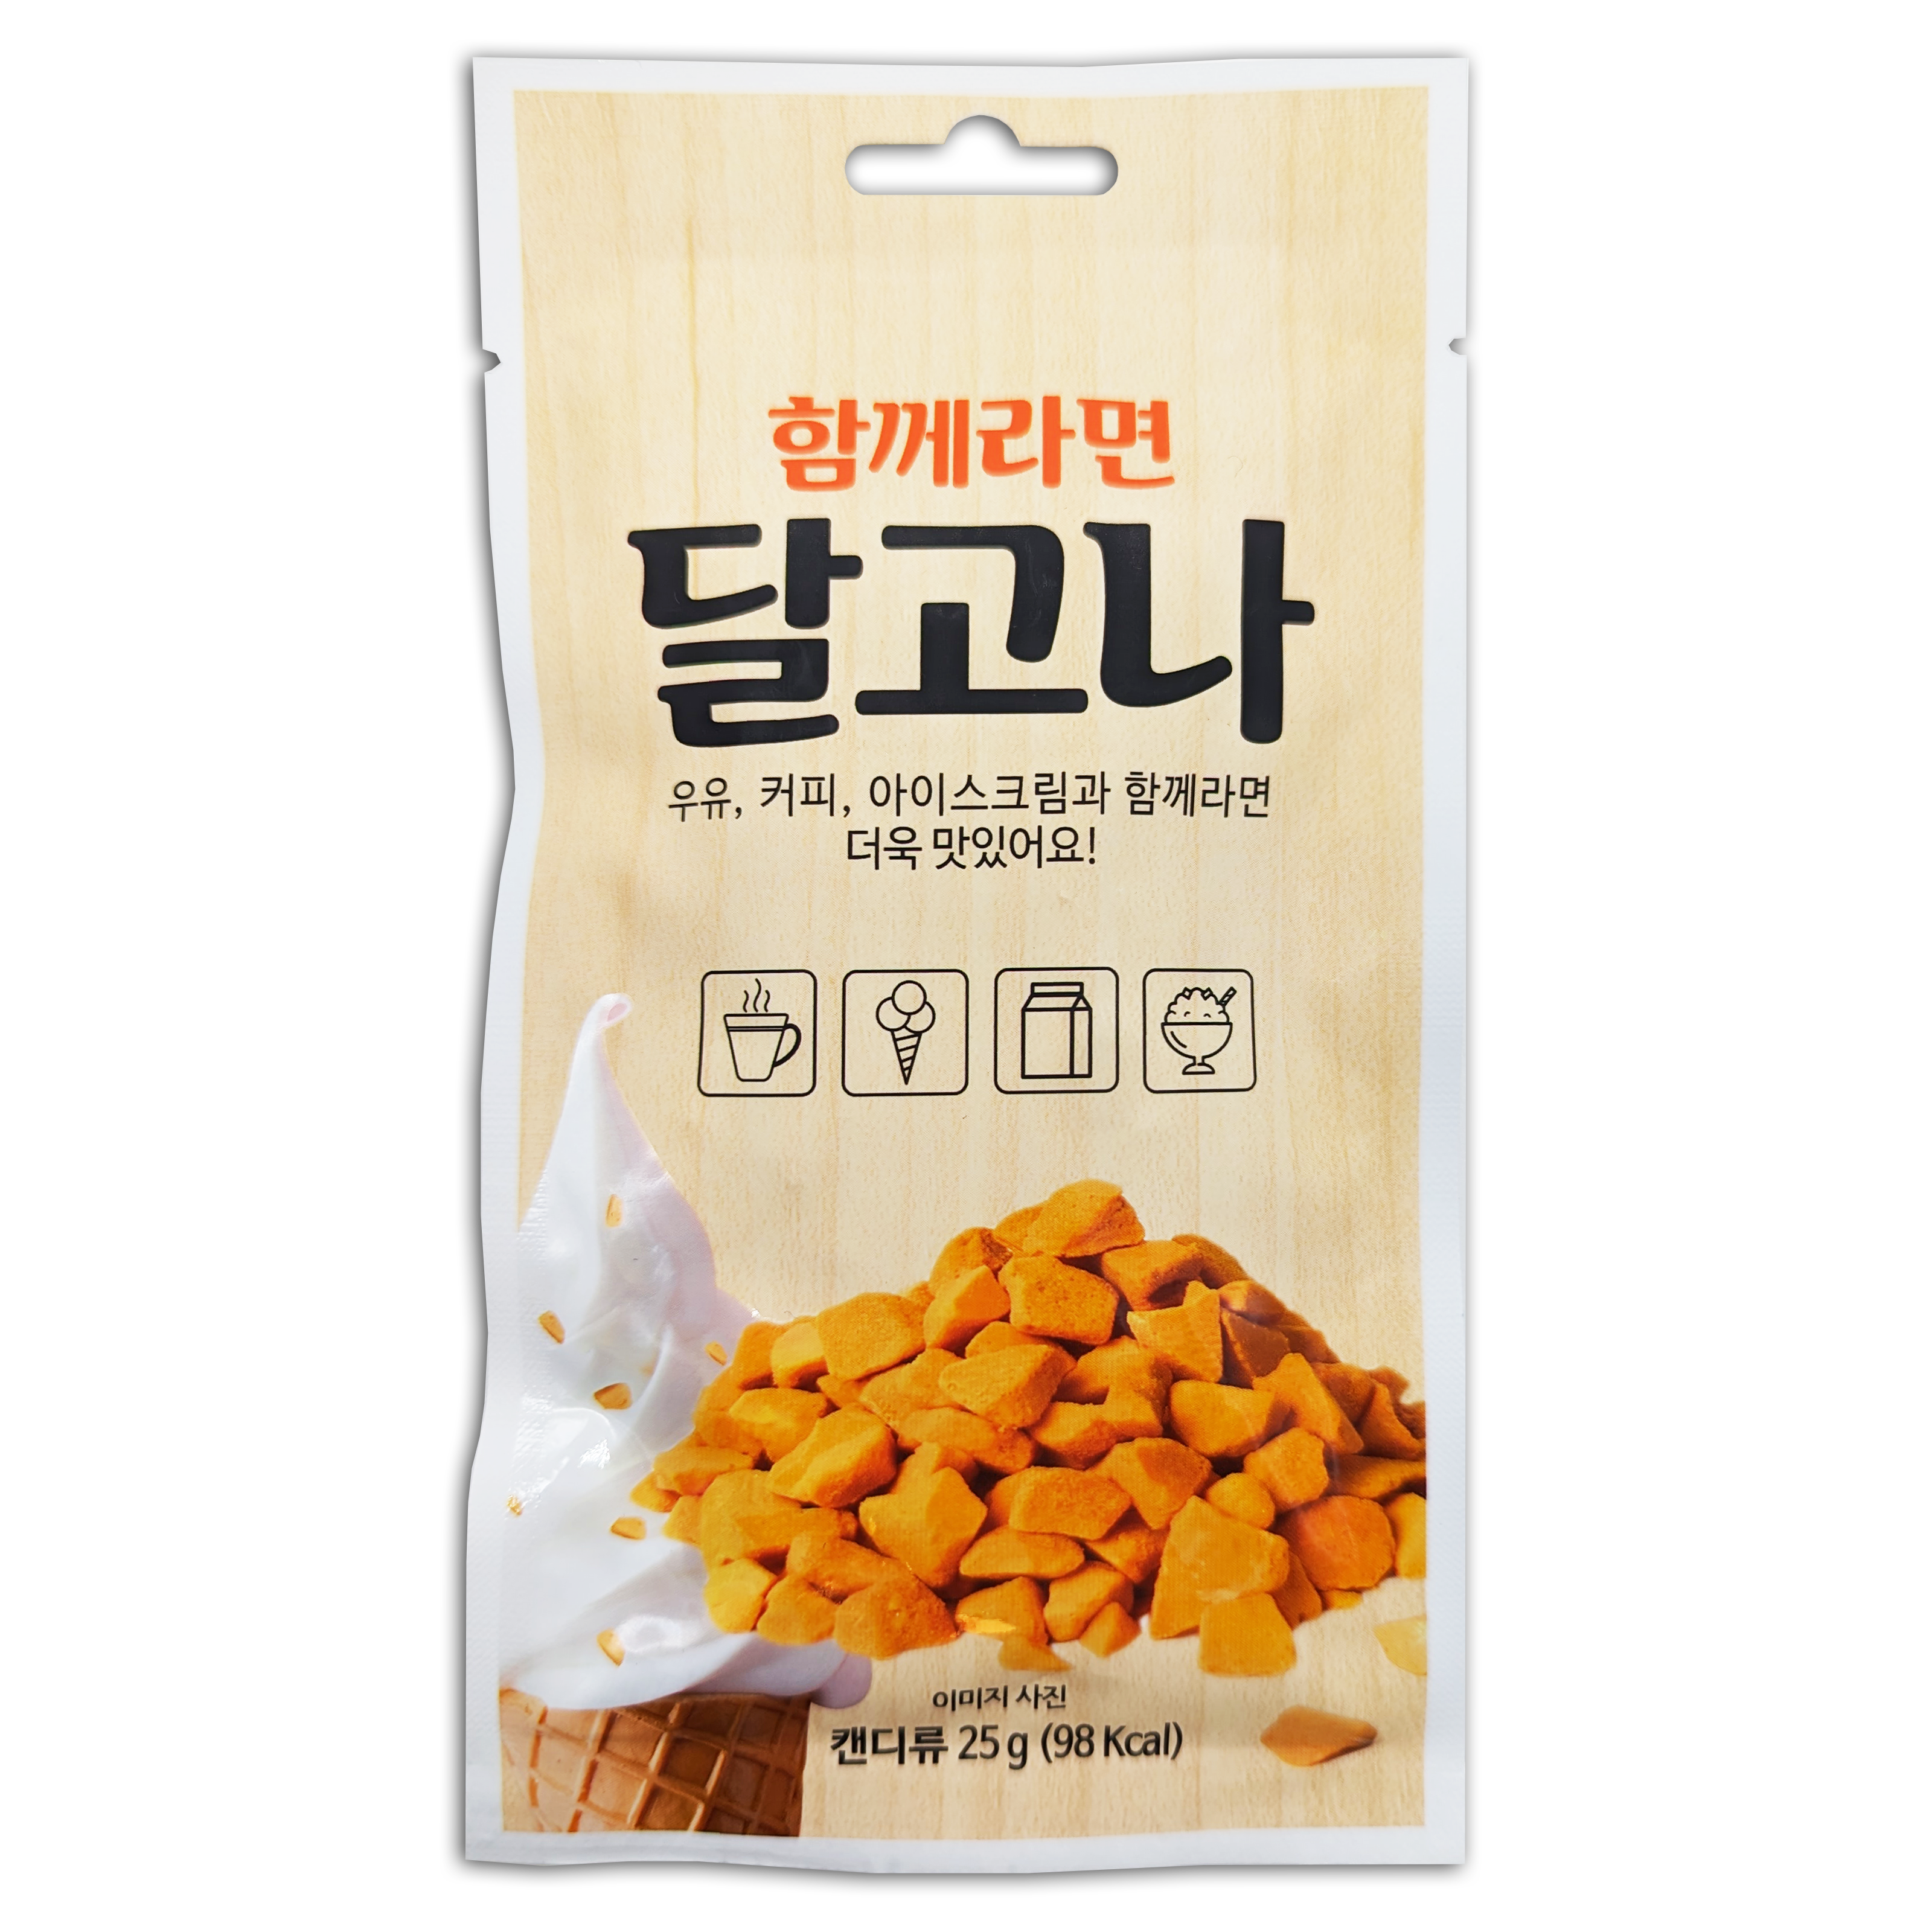 Dalgona Cookie: A traditional Korean sweet